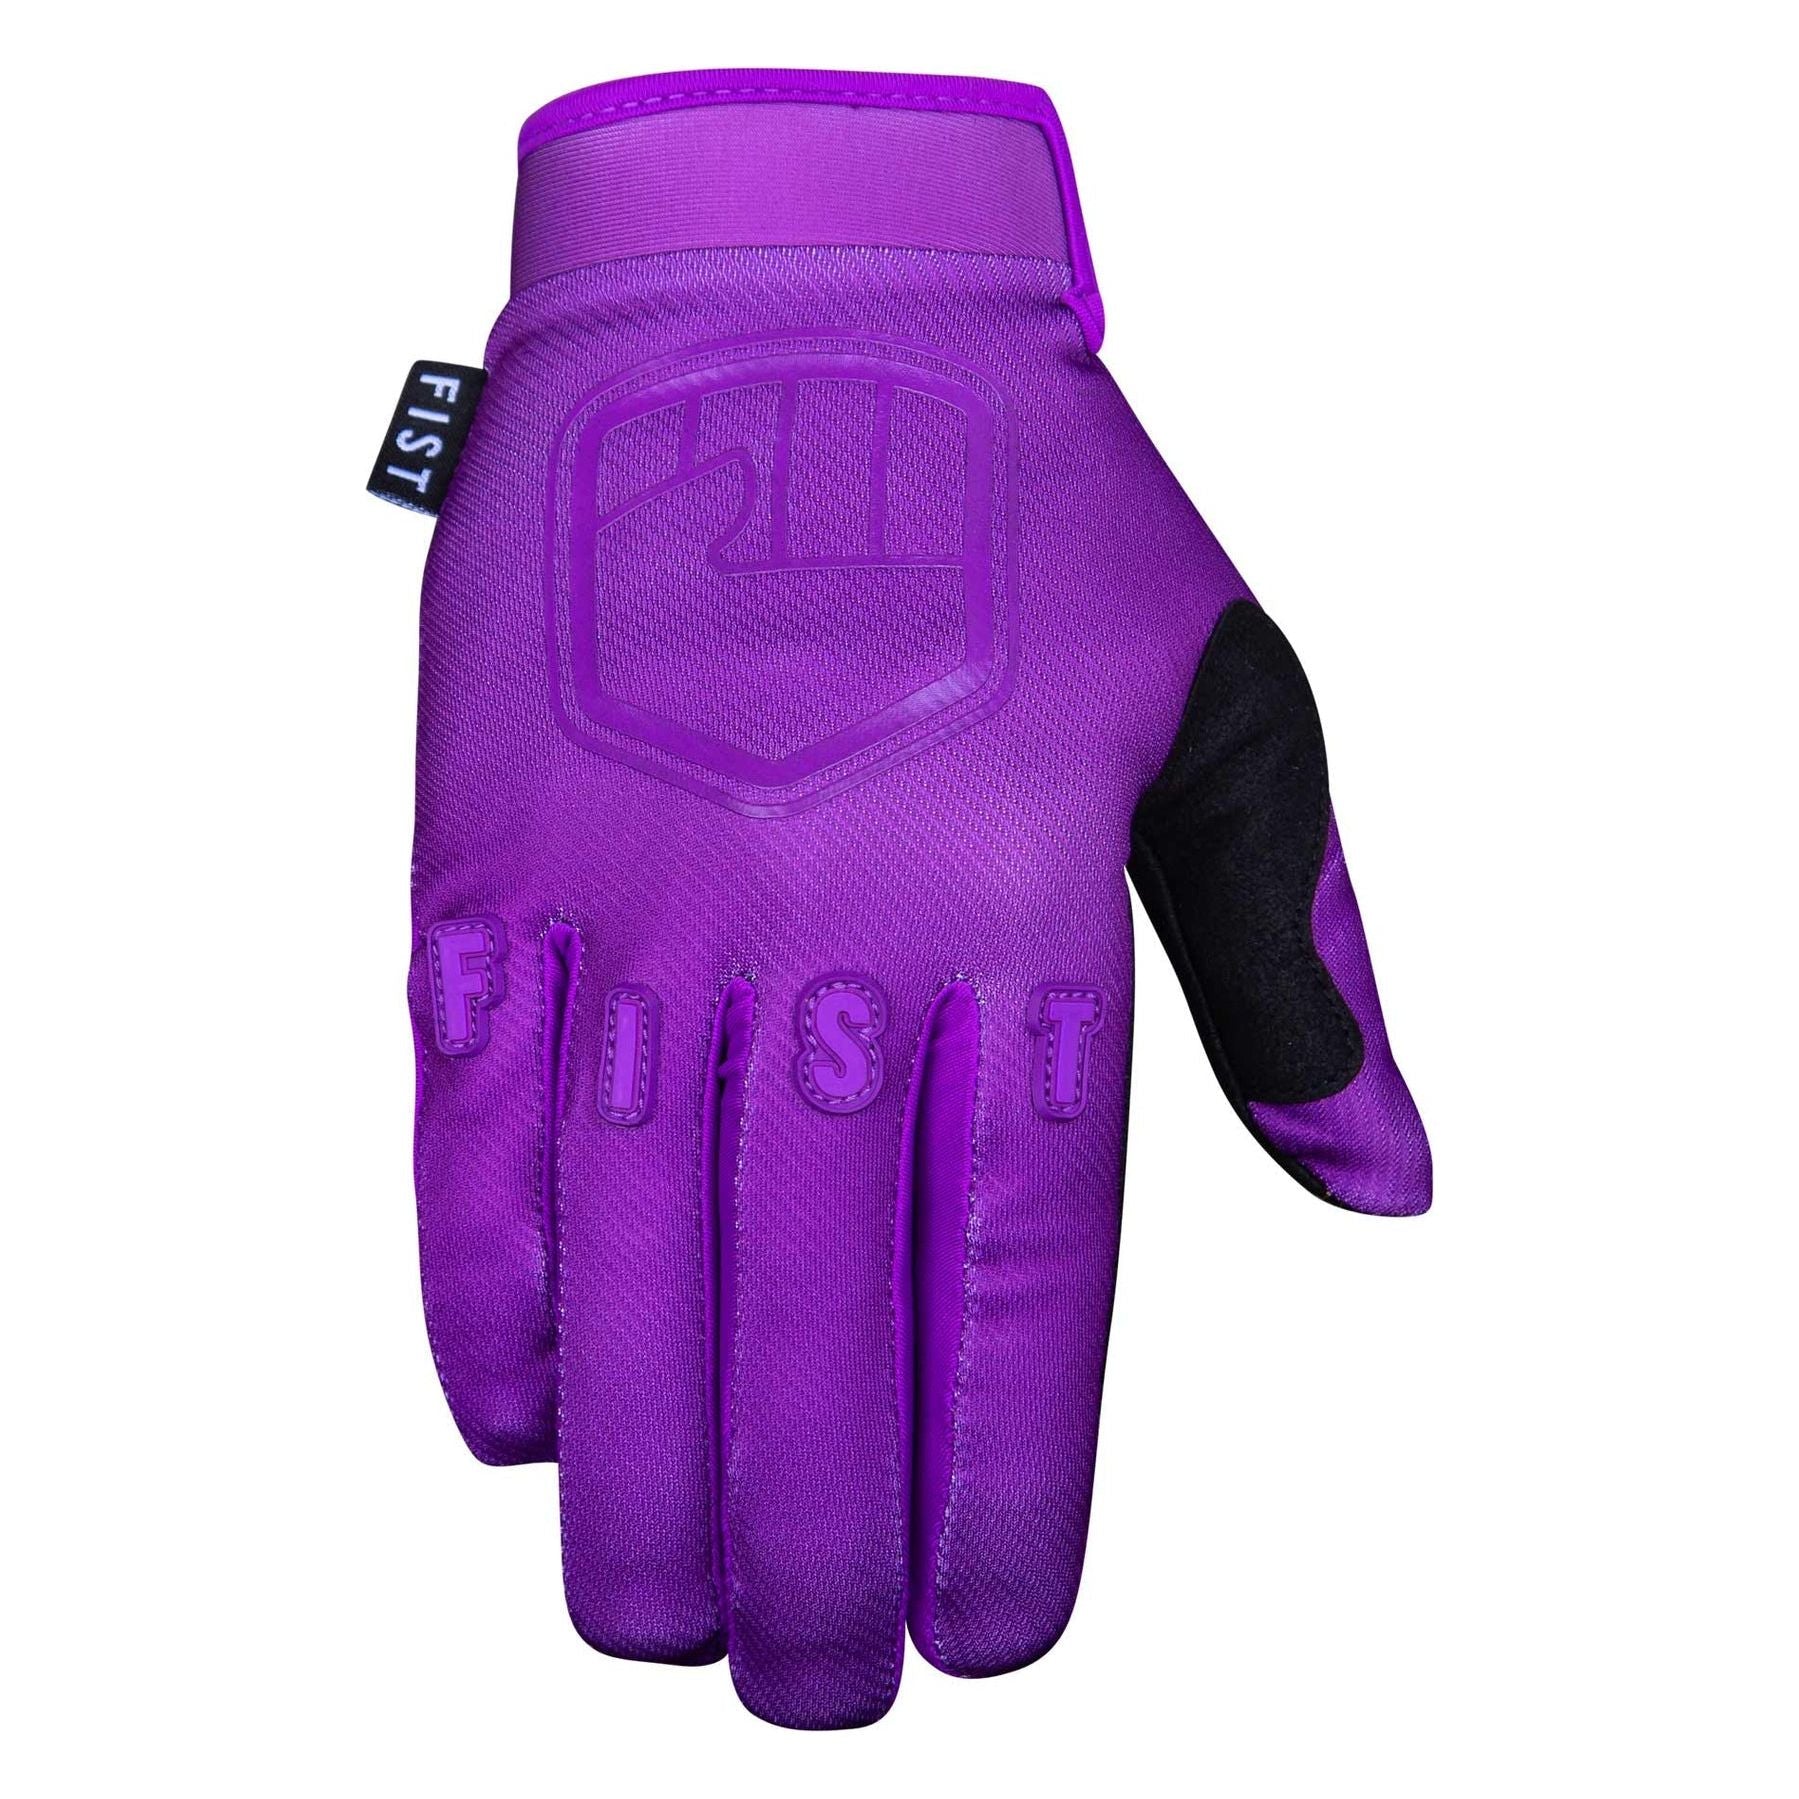 Fist Handwear Stocker Youth Strapped Glove - Youth M - Purple Stocker - Image 1